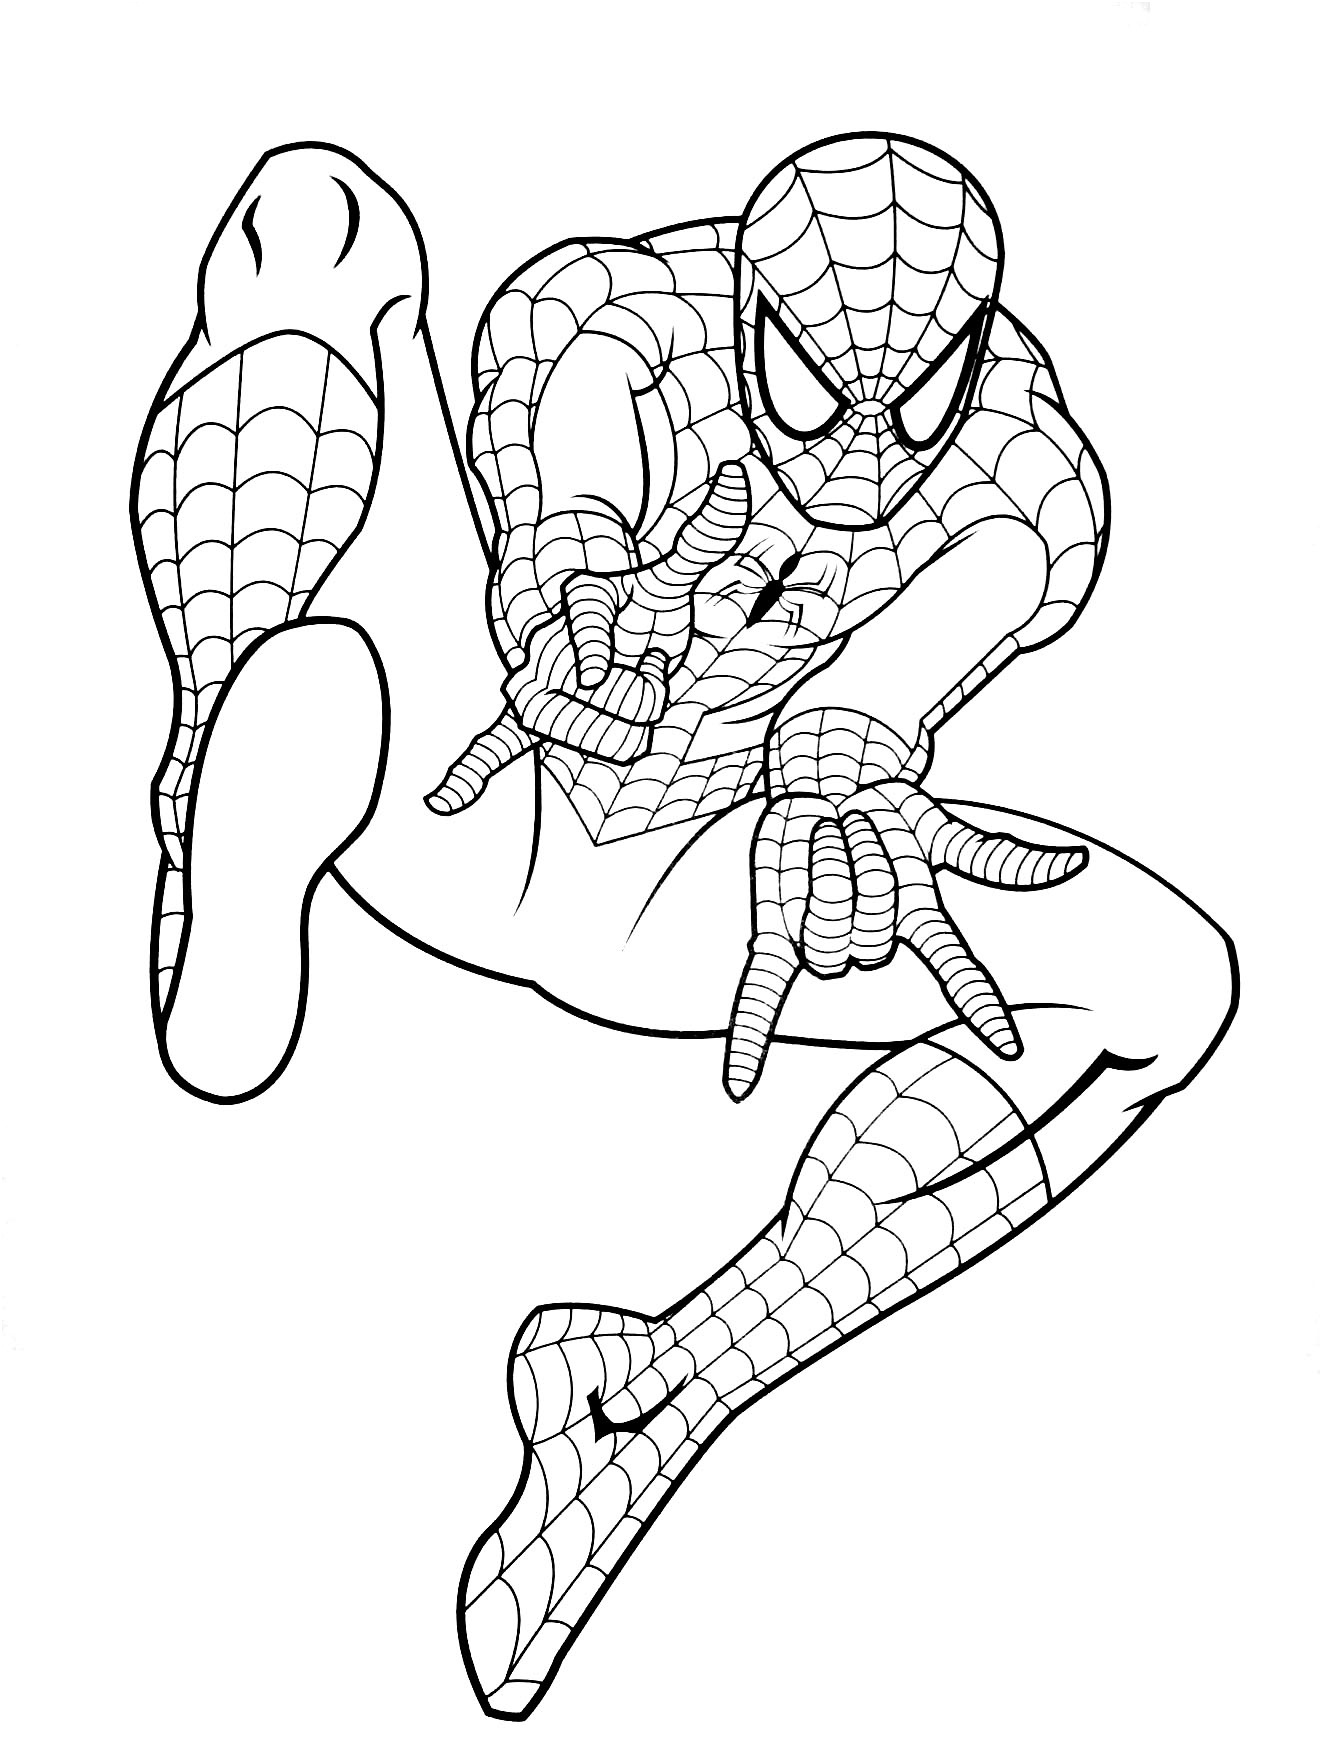 coloriage spiderman gratuit